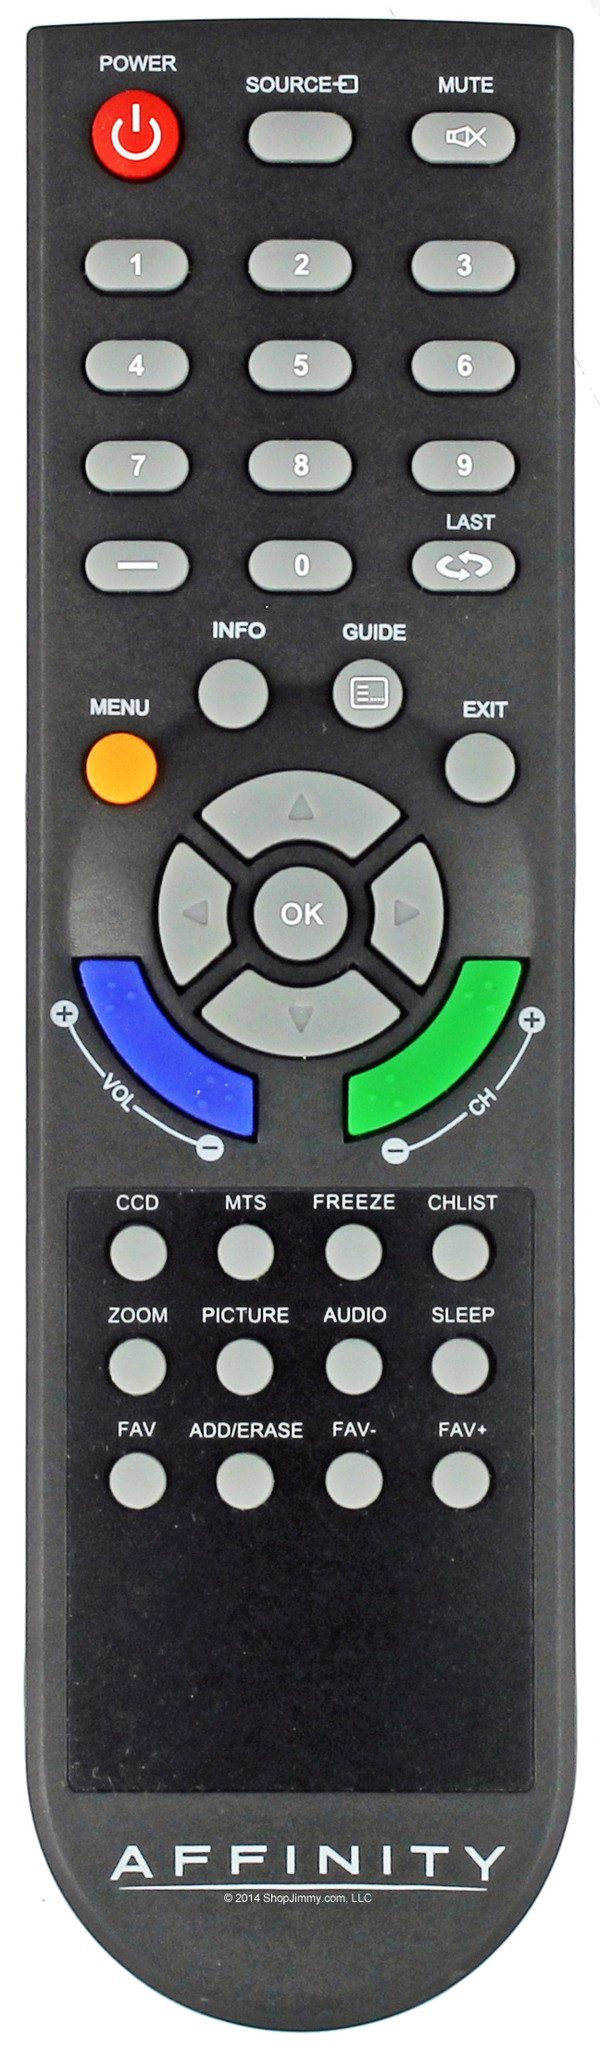 Affinity Remote Control Version 1